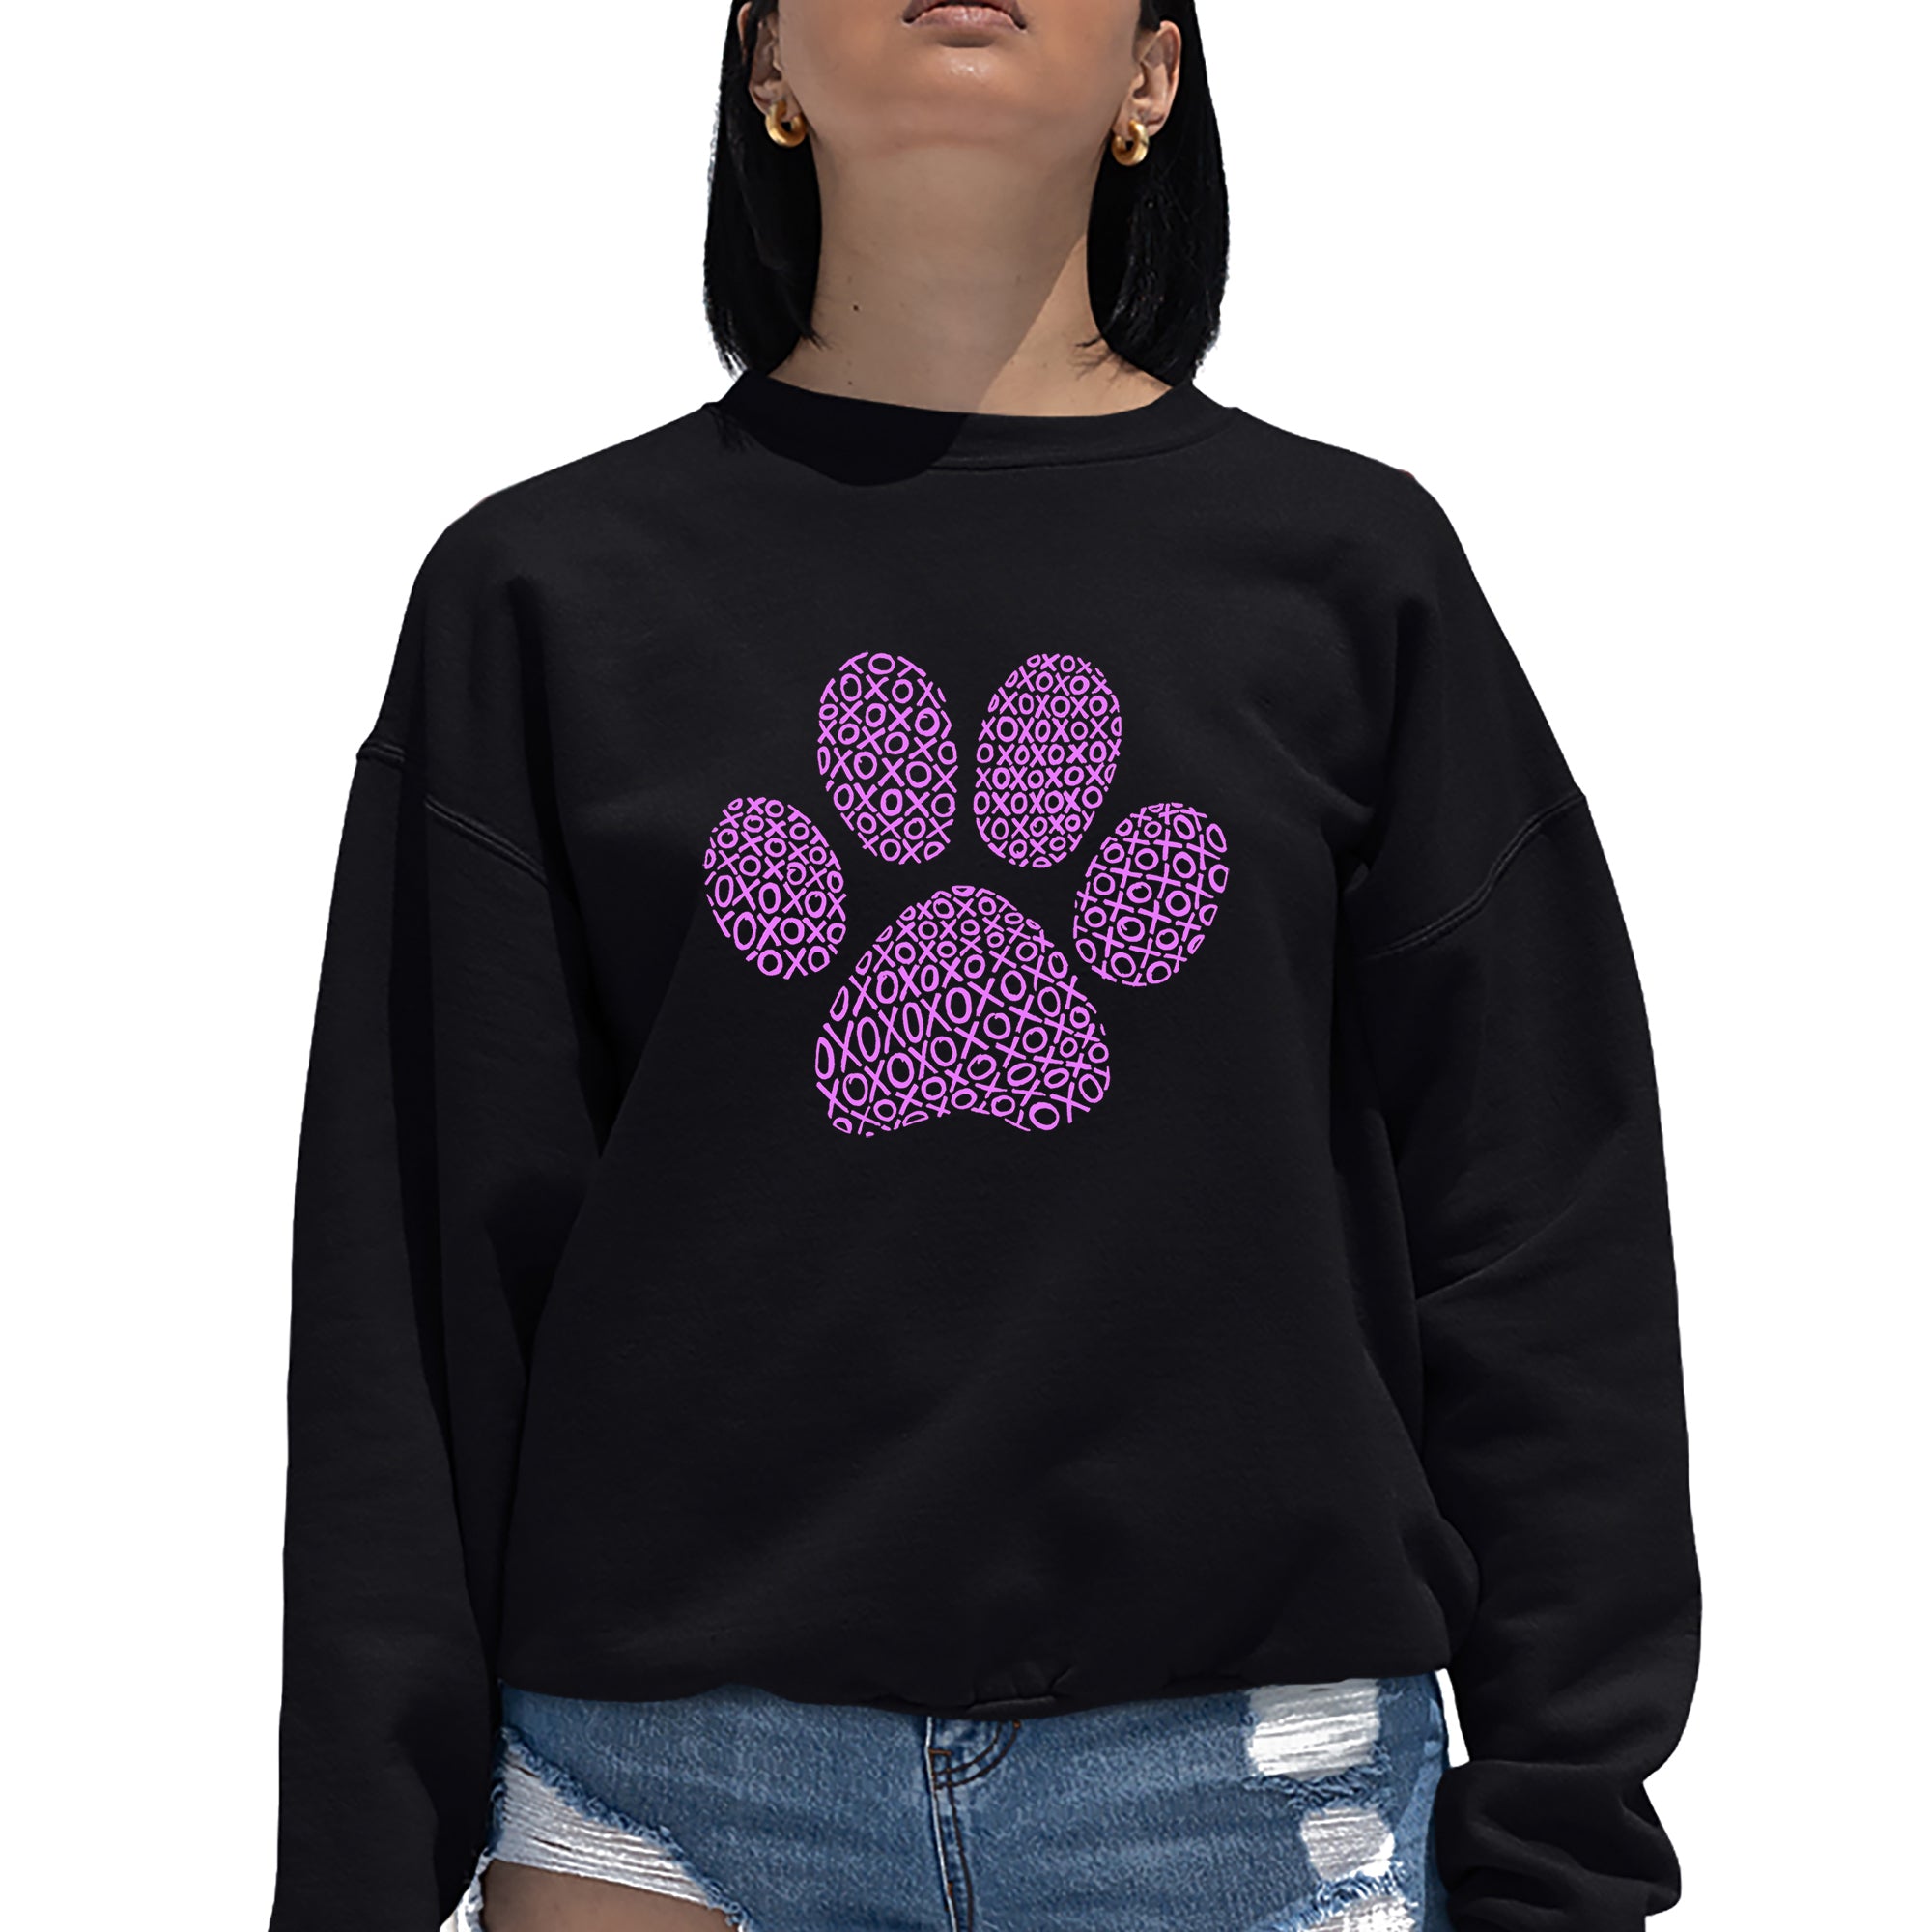 XOXO Dog Paw - Women's Word Art Crewneck Sweatshirt - Black - X-Large